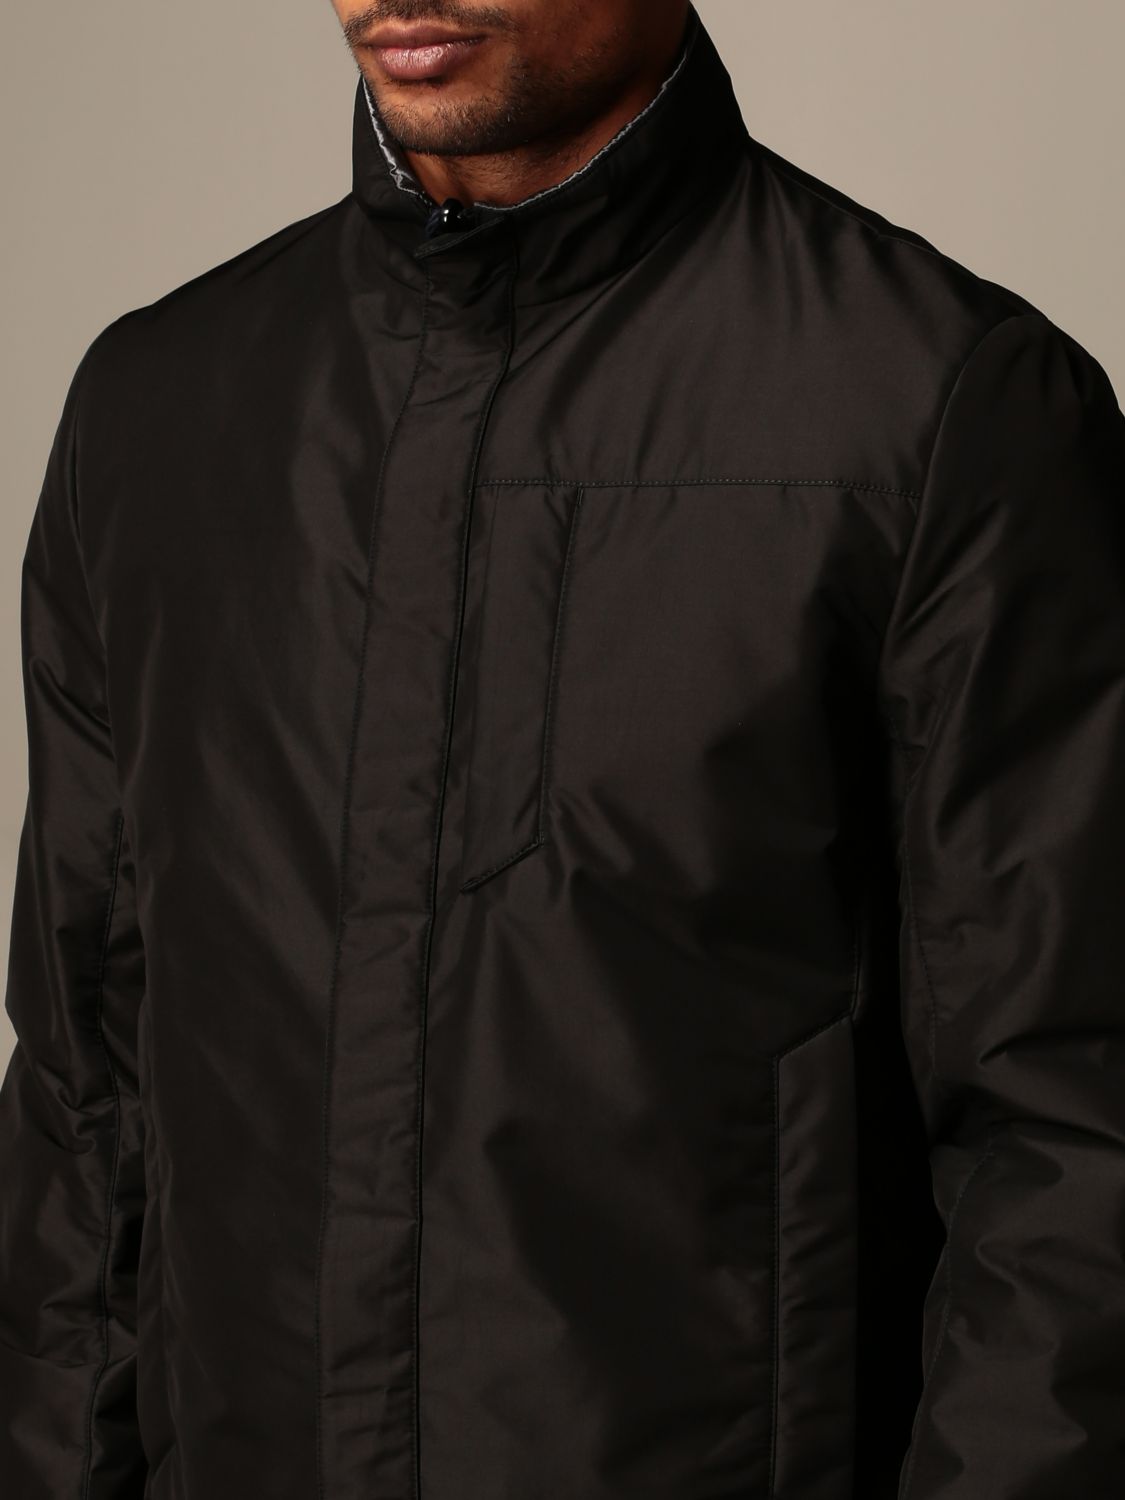 prada jacket black